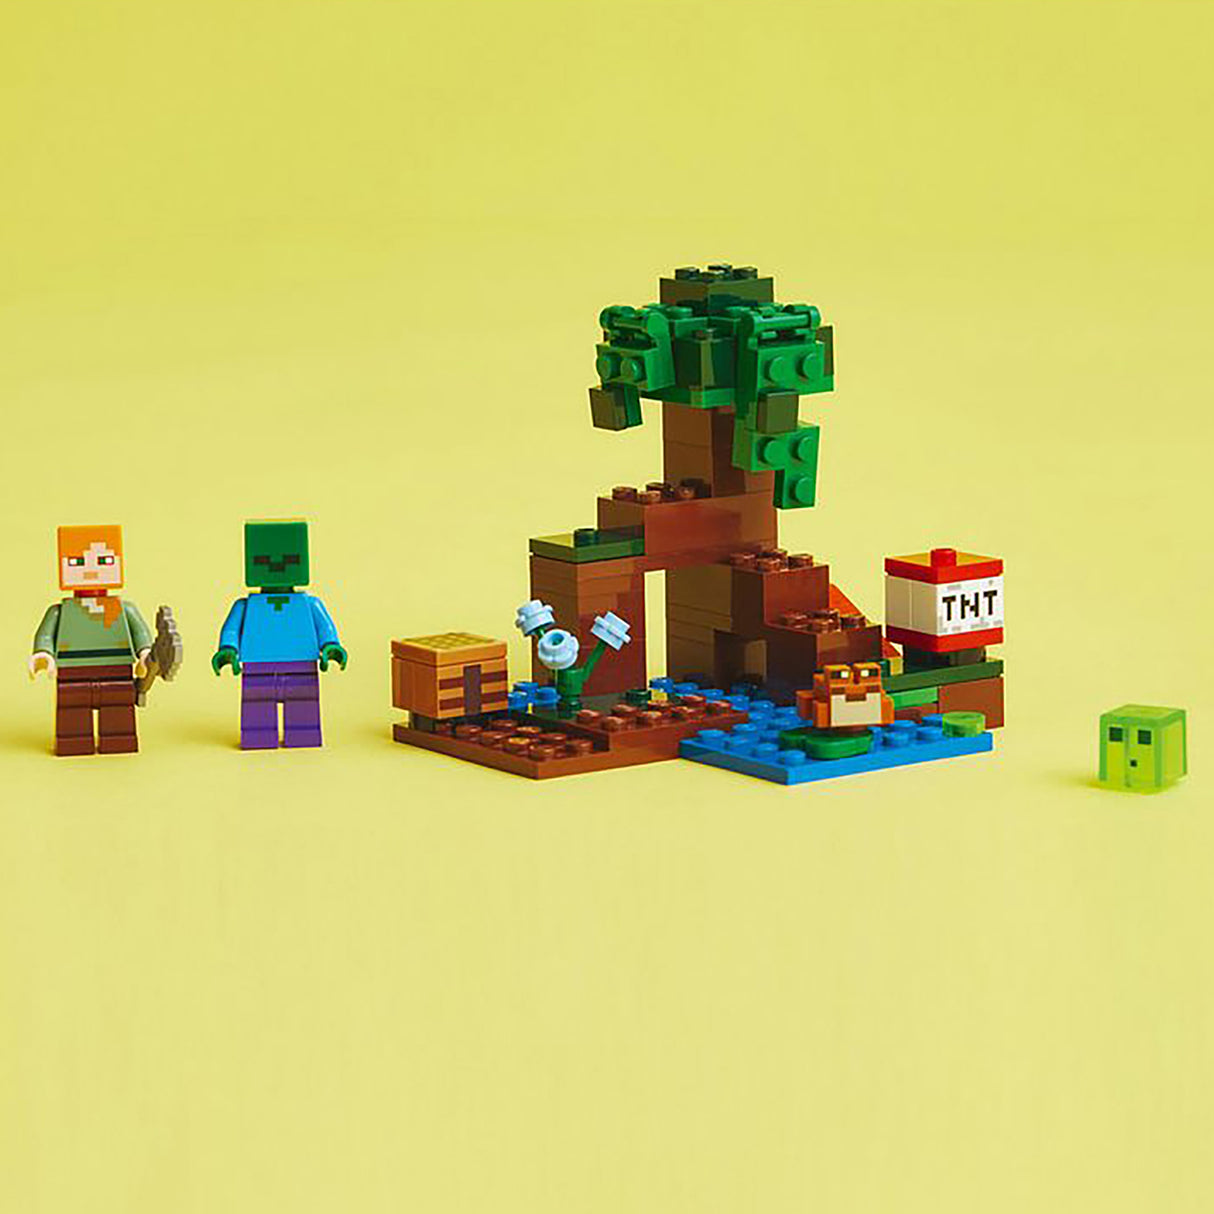 LEGO Minecraft The Swamp Adventure 21240 (65 pieces)